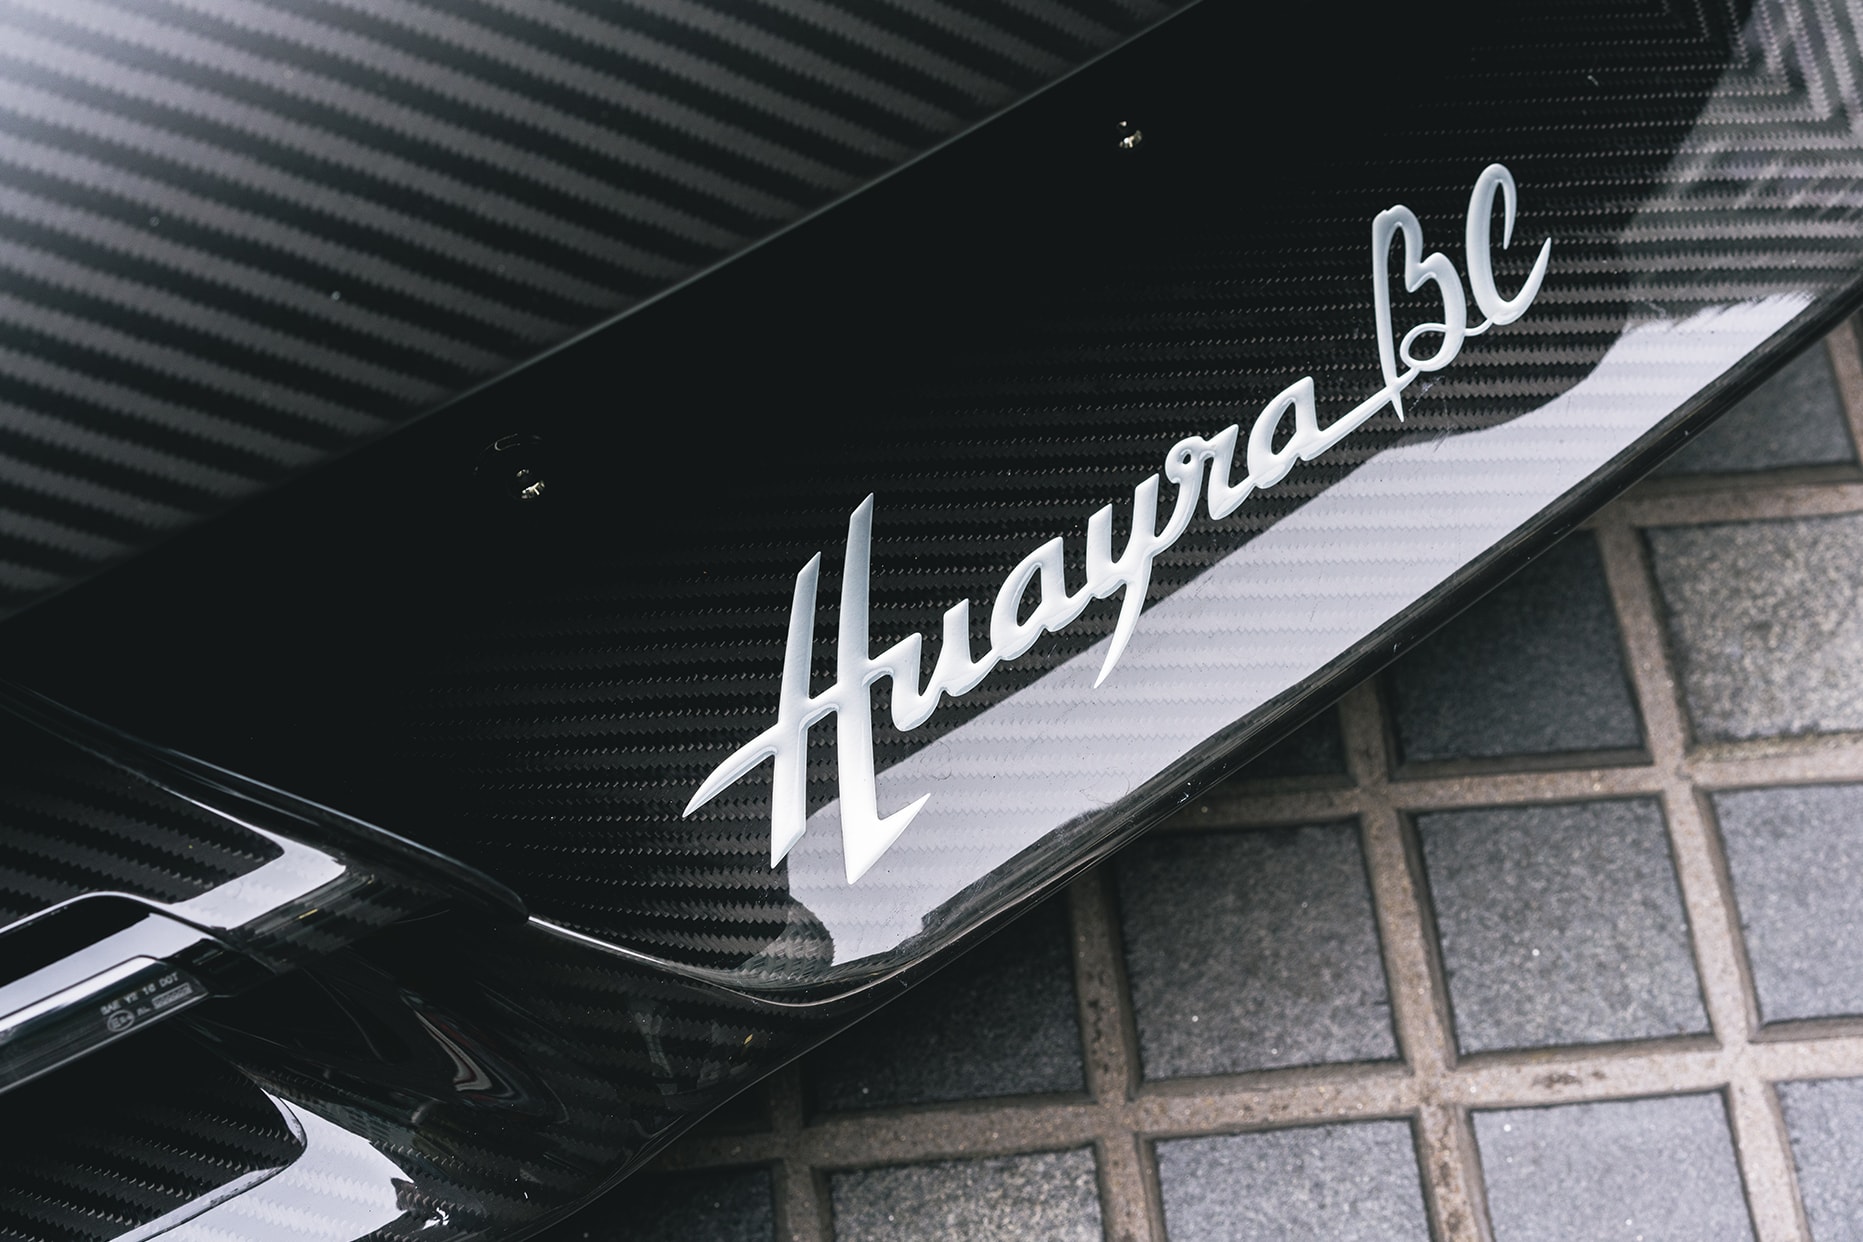 A Conversation with Horacio Pagani Zonda Huayra Hypercar Sportscar Supercar Super car racing Titanium Carbon Fiber Sports Expensive Luxury Hong Kong exhaust music fancy Music Tech Electric Motor Horsepower 